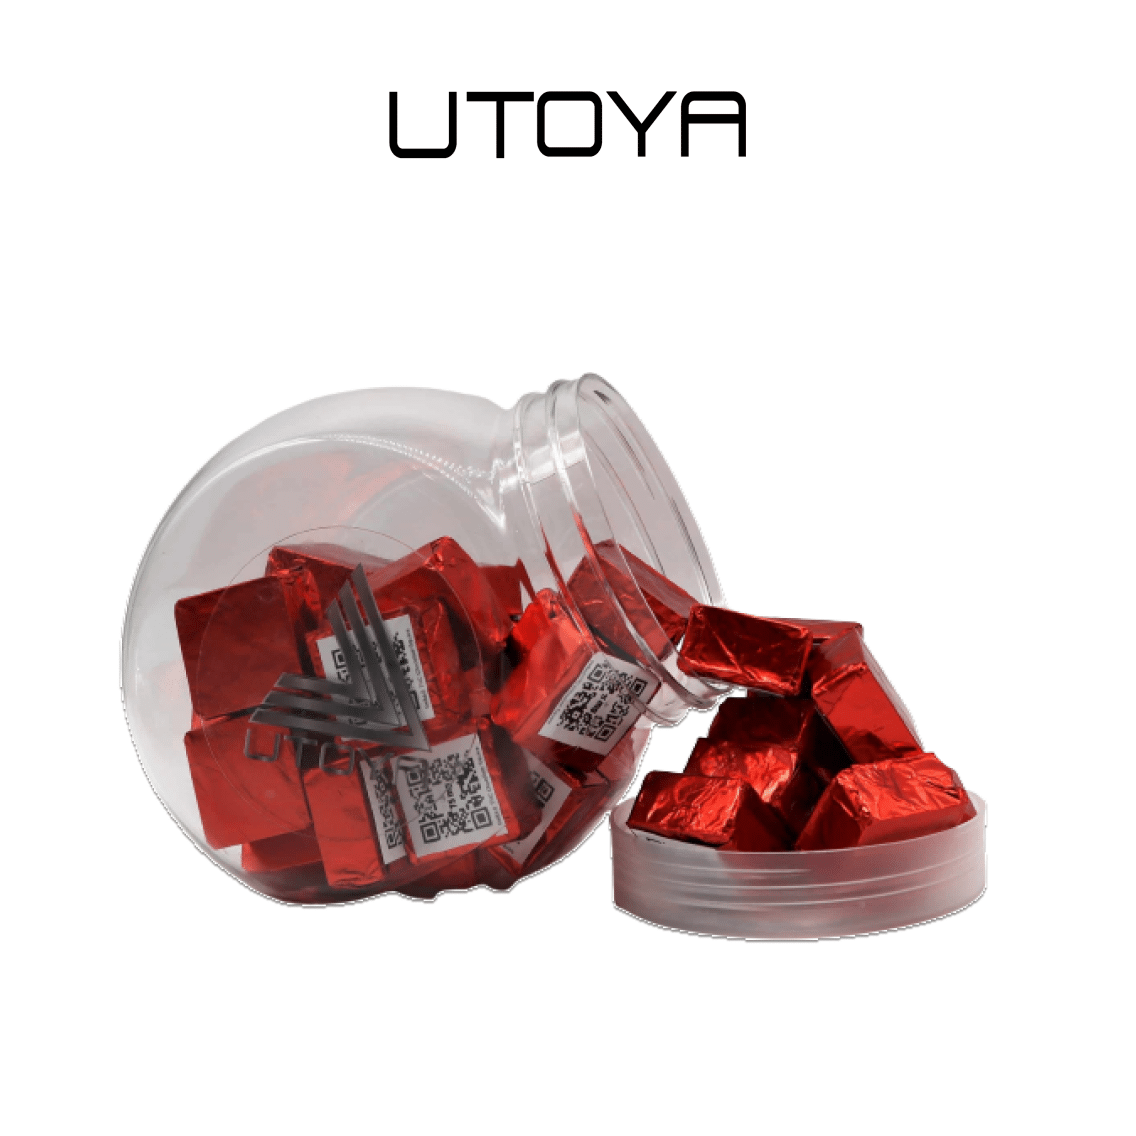 Utoya | Delta 8 THC Chocolate Squares 300mg - 3750mg Best Price